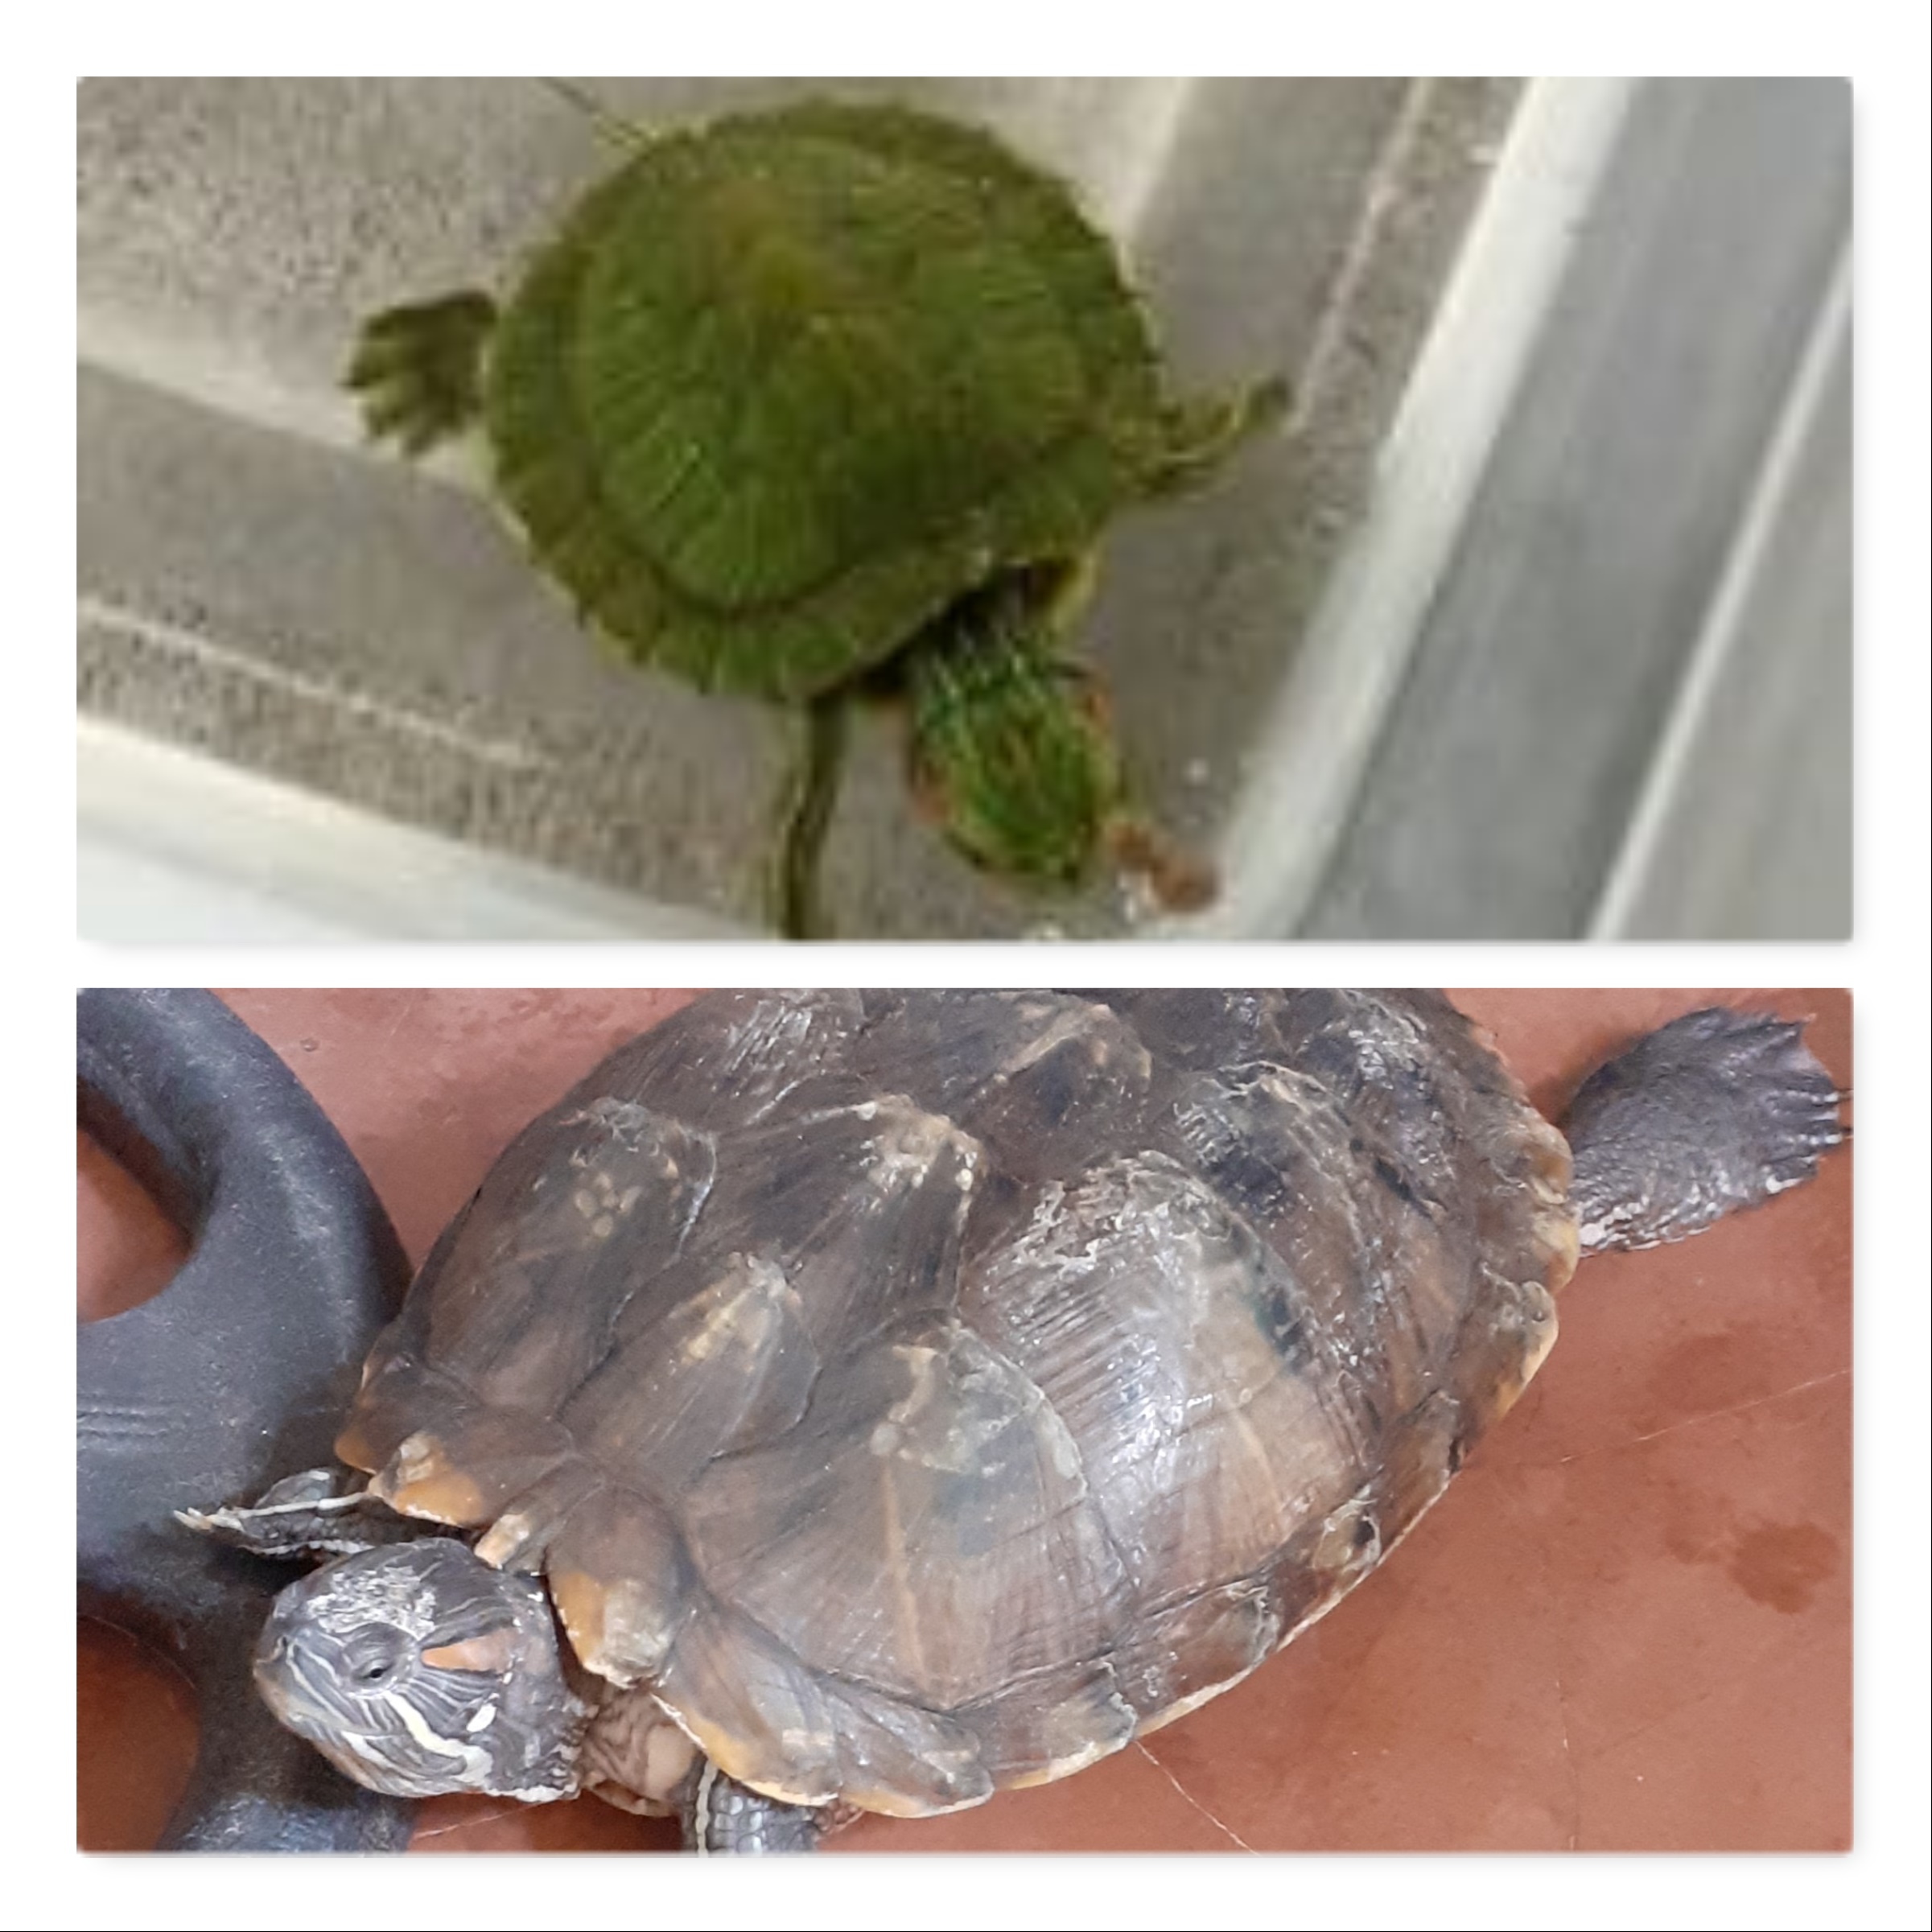 Michael, the turtle